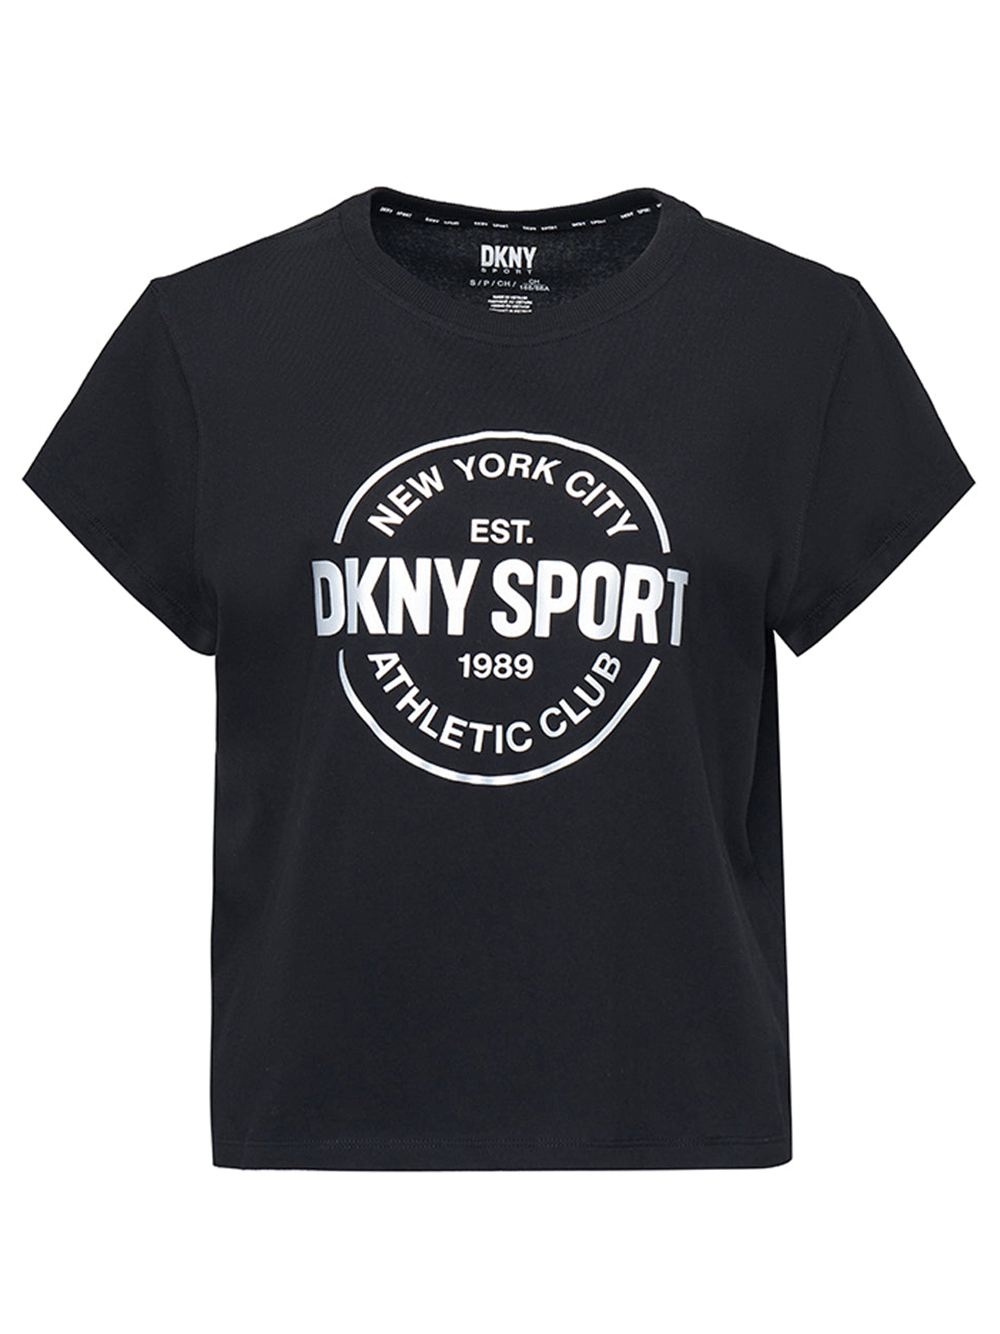 DKNY-Sport-Tompkins-Metallic-Athletic-Medallion-Logo-Cropped-Tee-Black-1